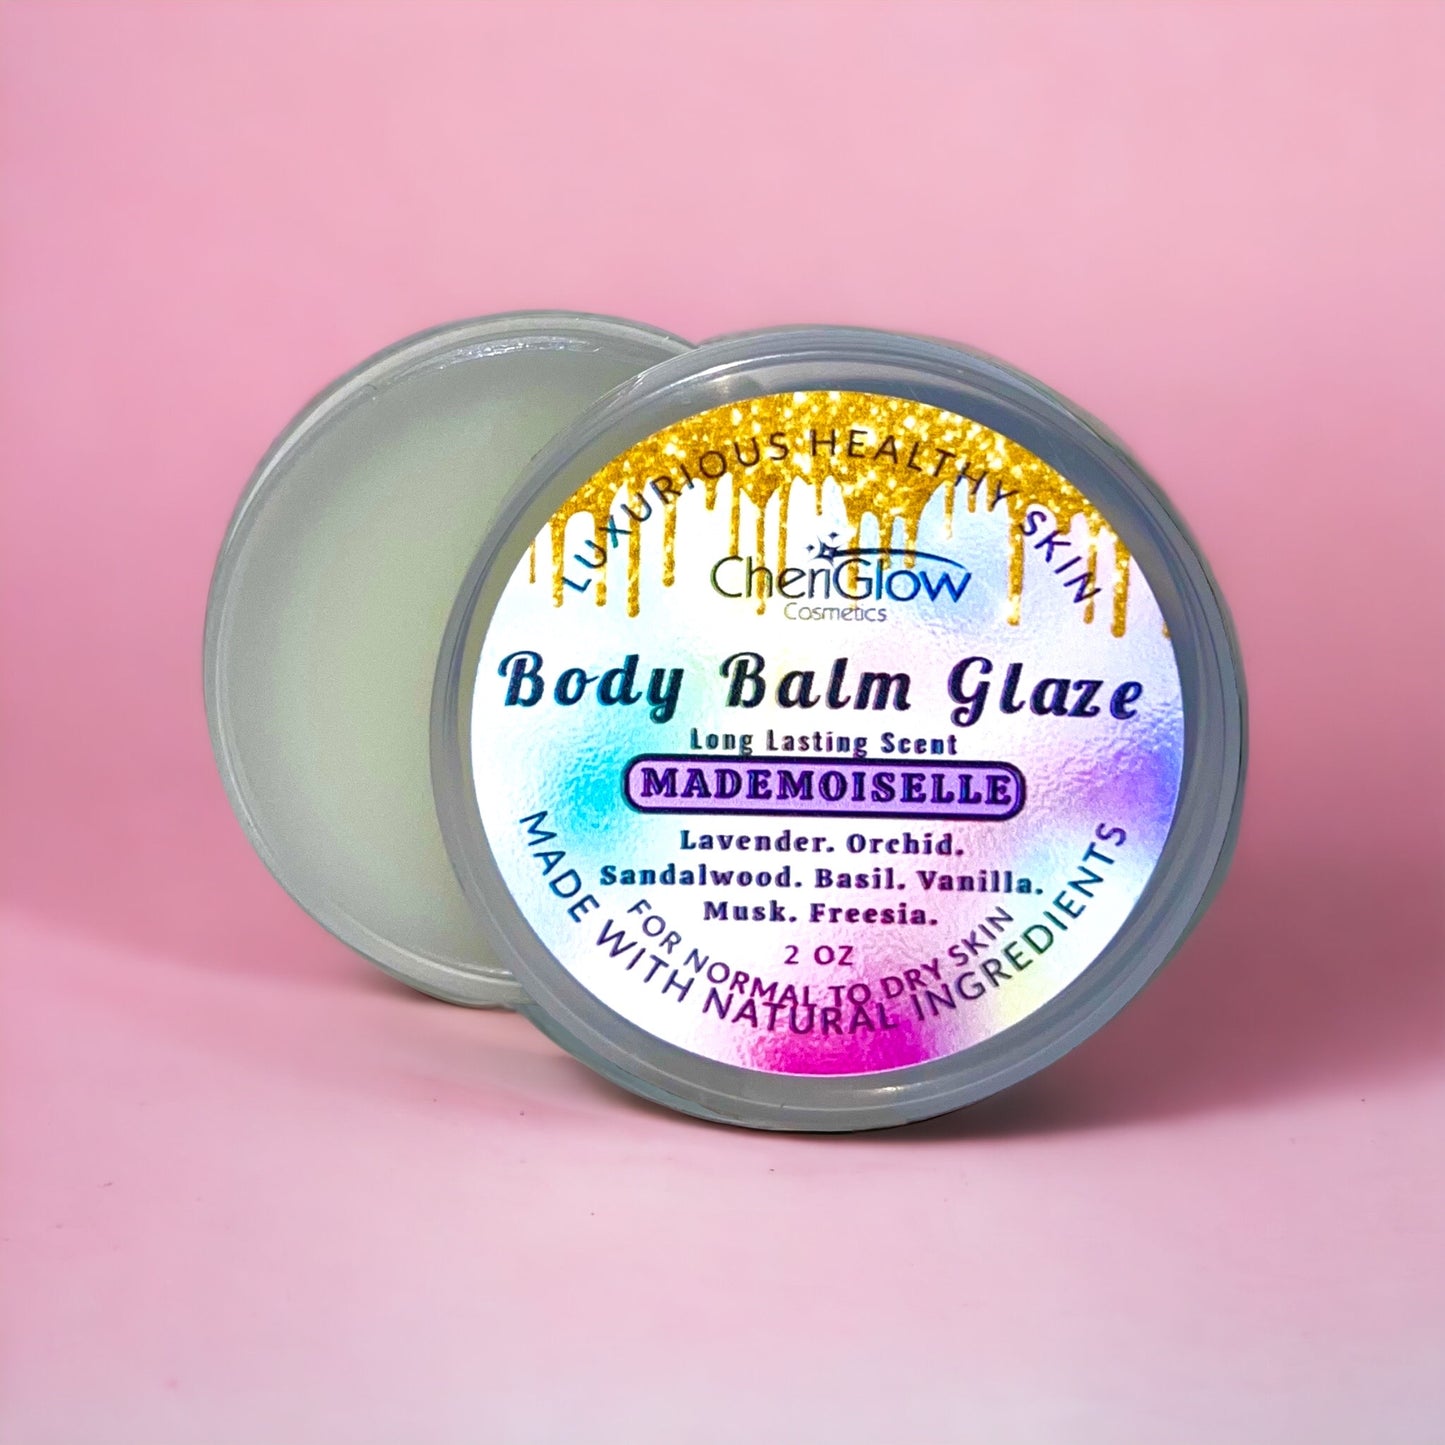 Body Balm Glaze - Mademoiselle